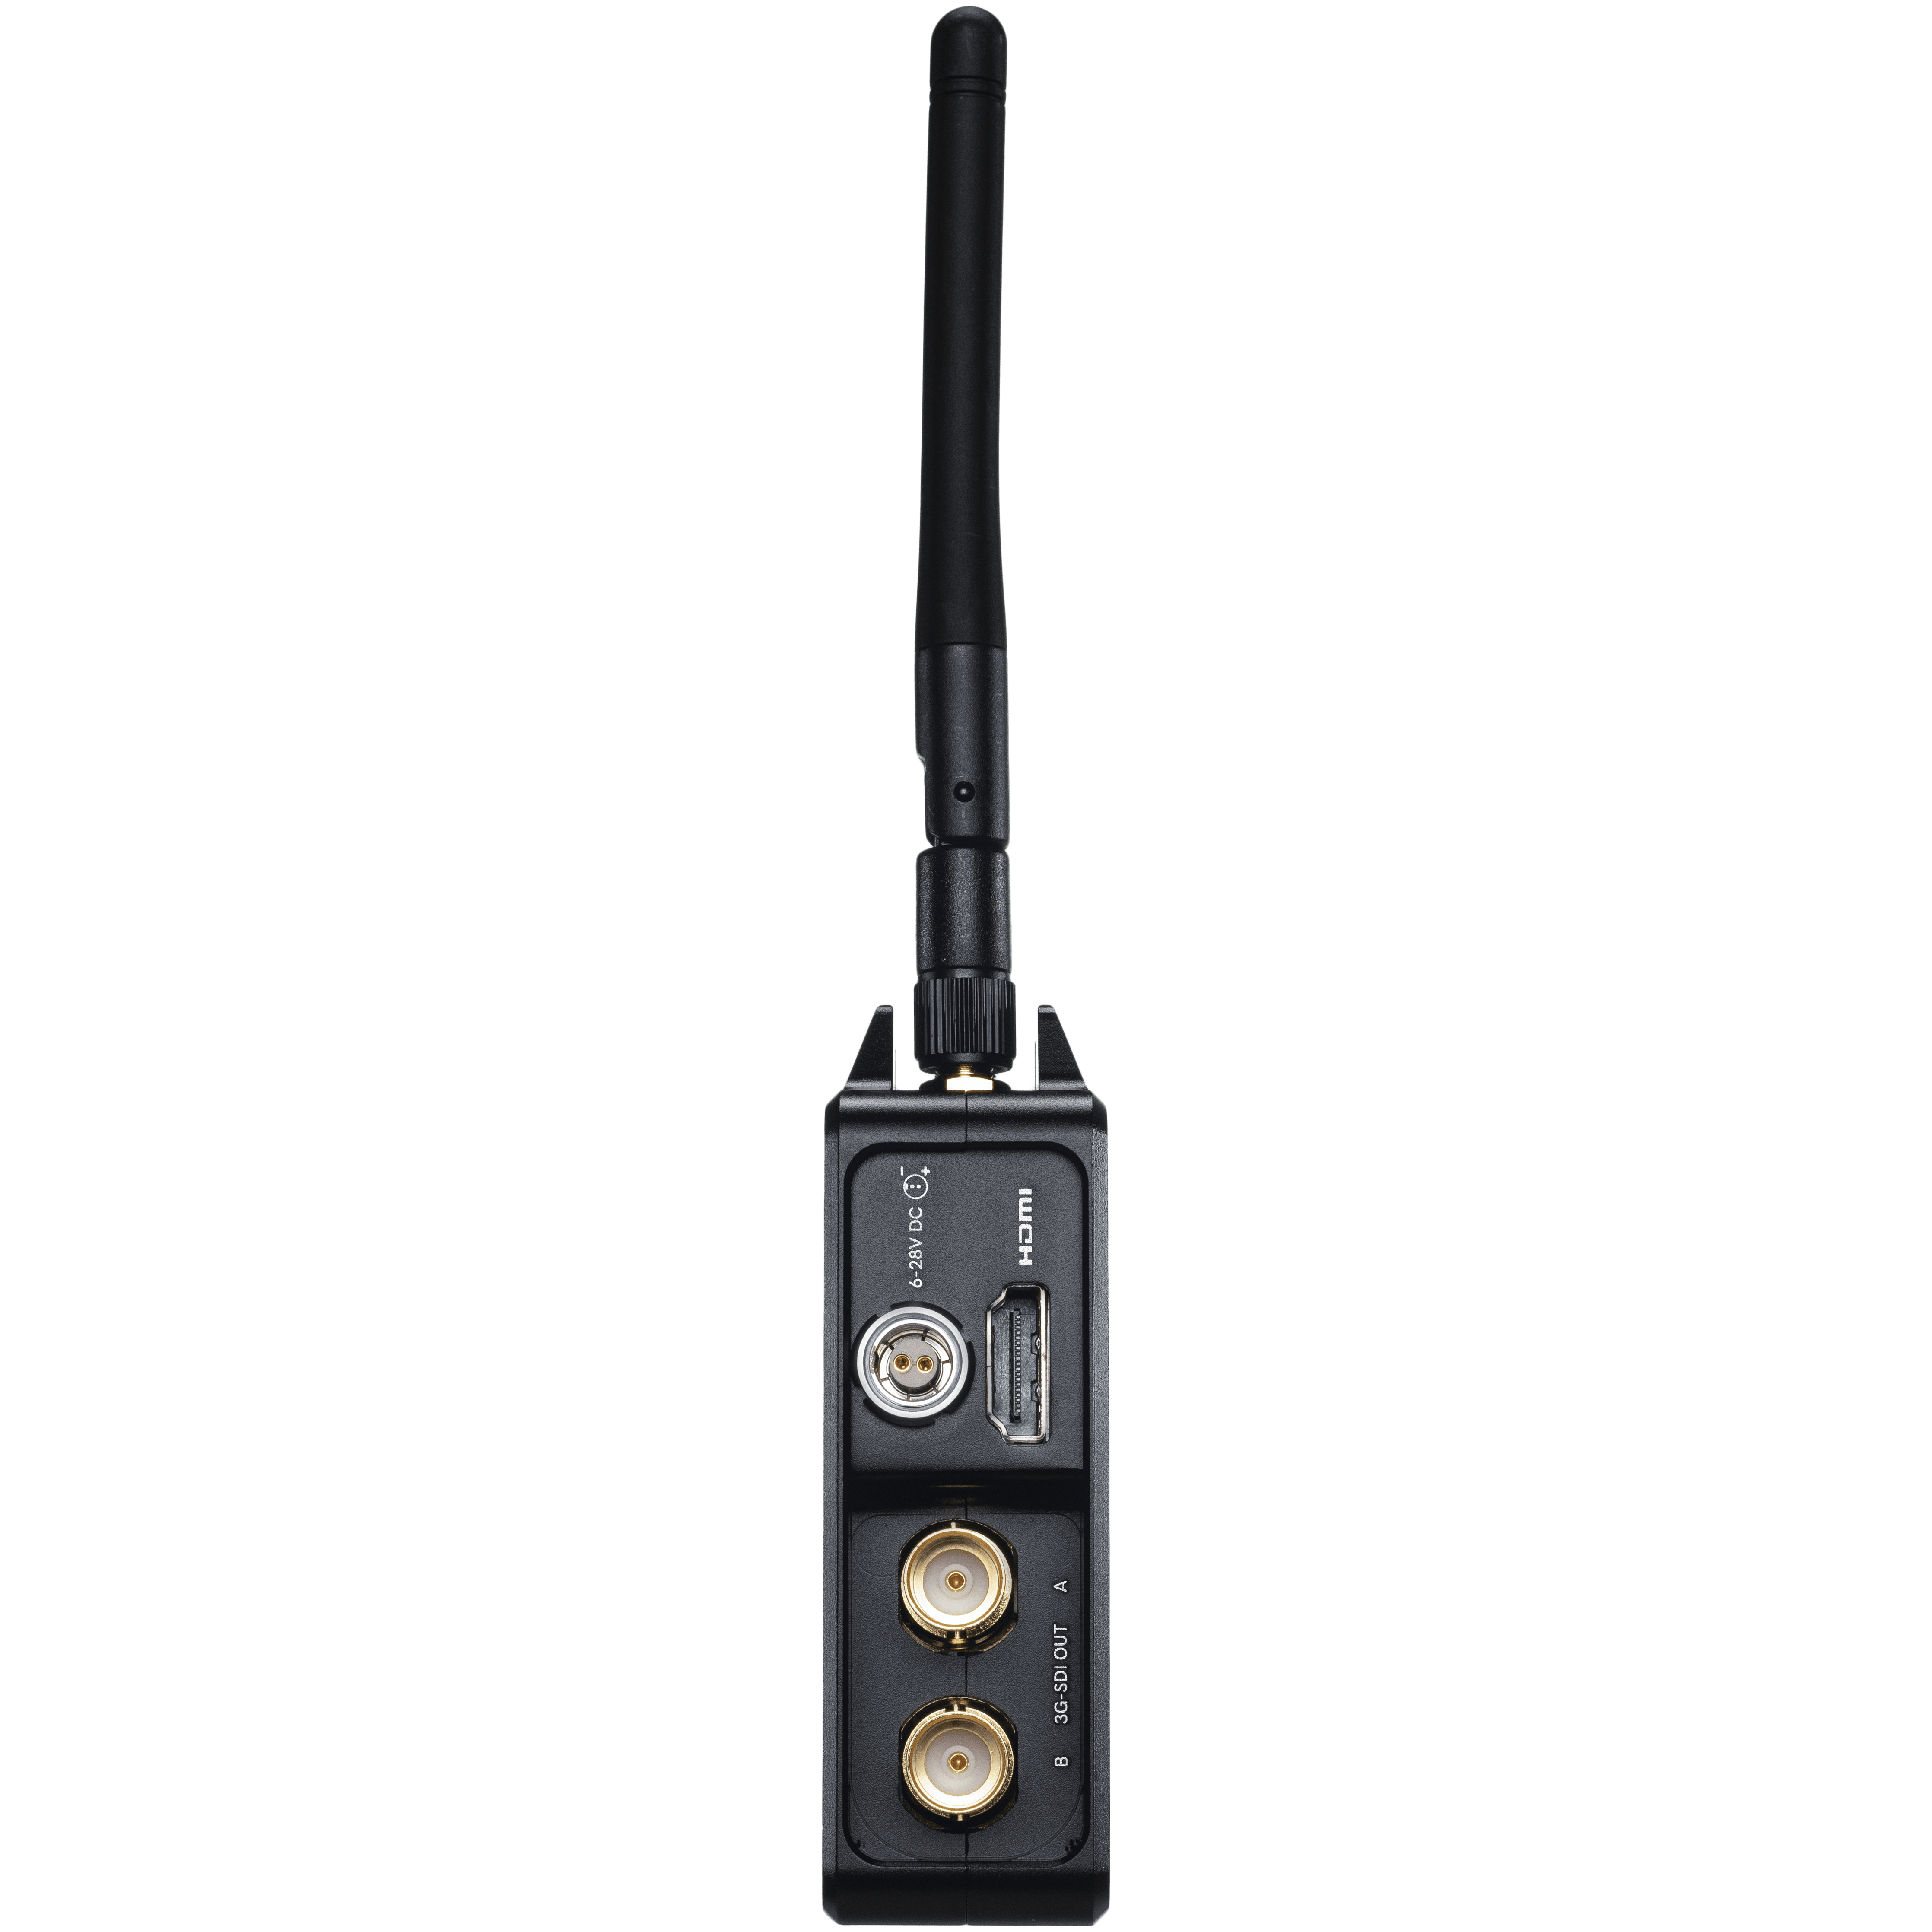 Teradek Bolt 4K LT 1500 Wireless Transmitter/Receiver Set